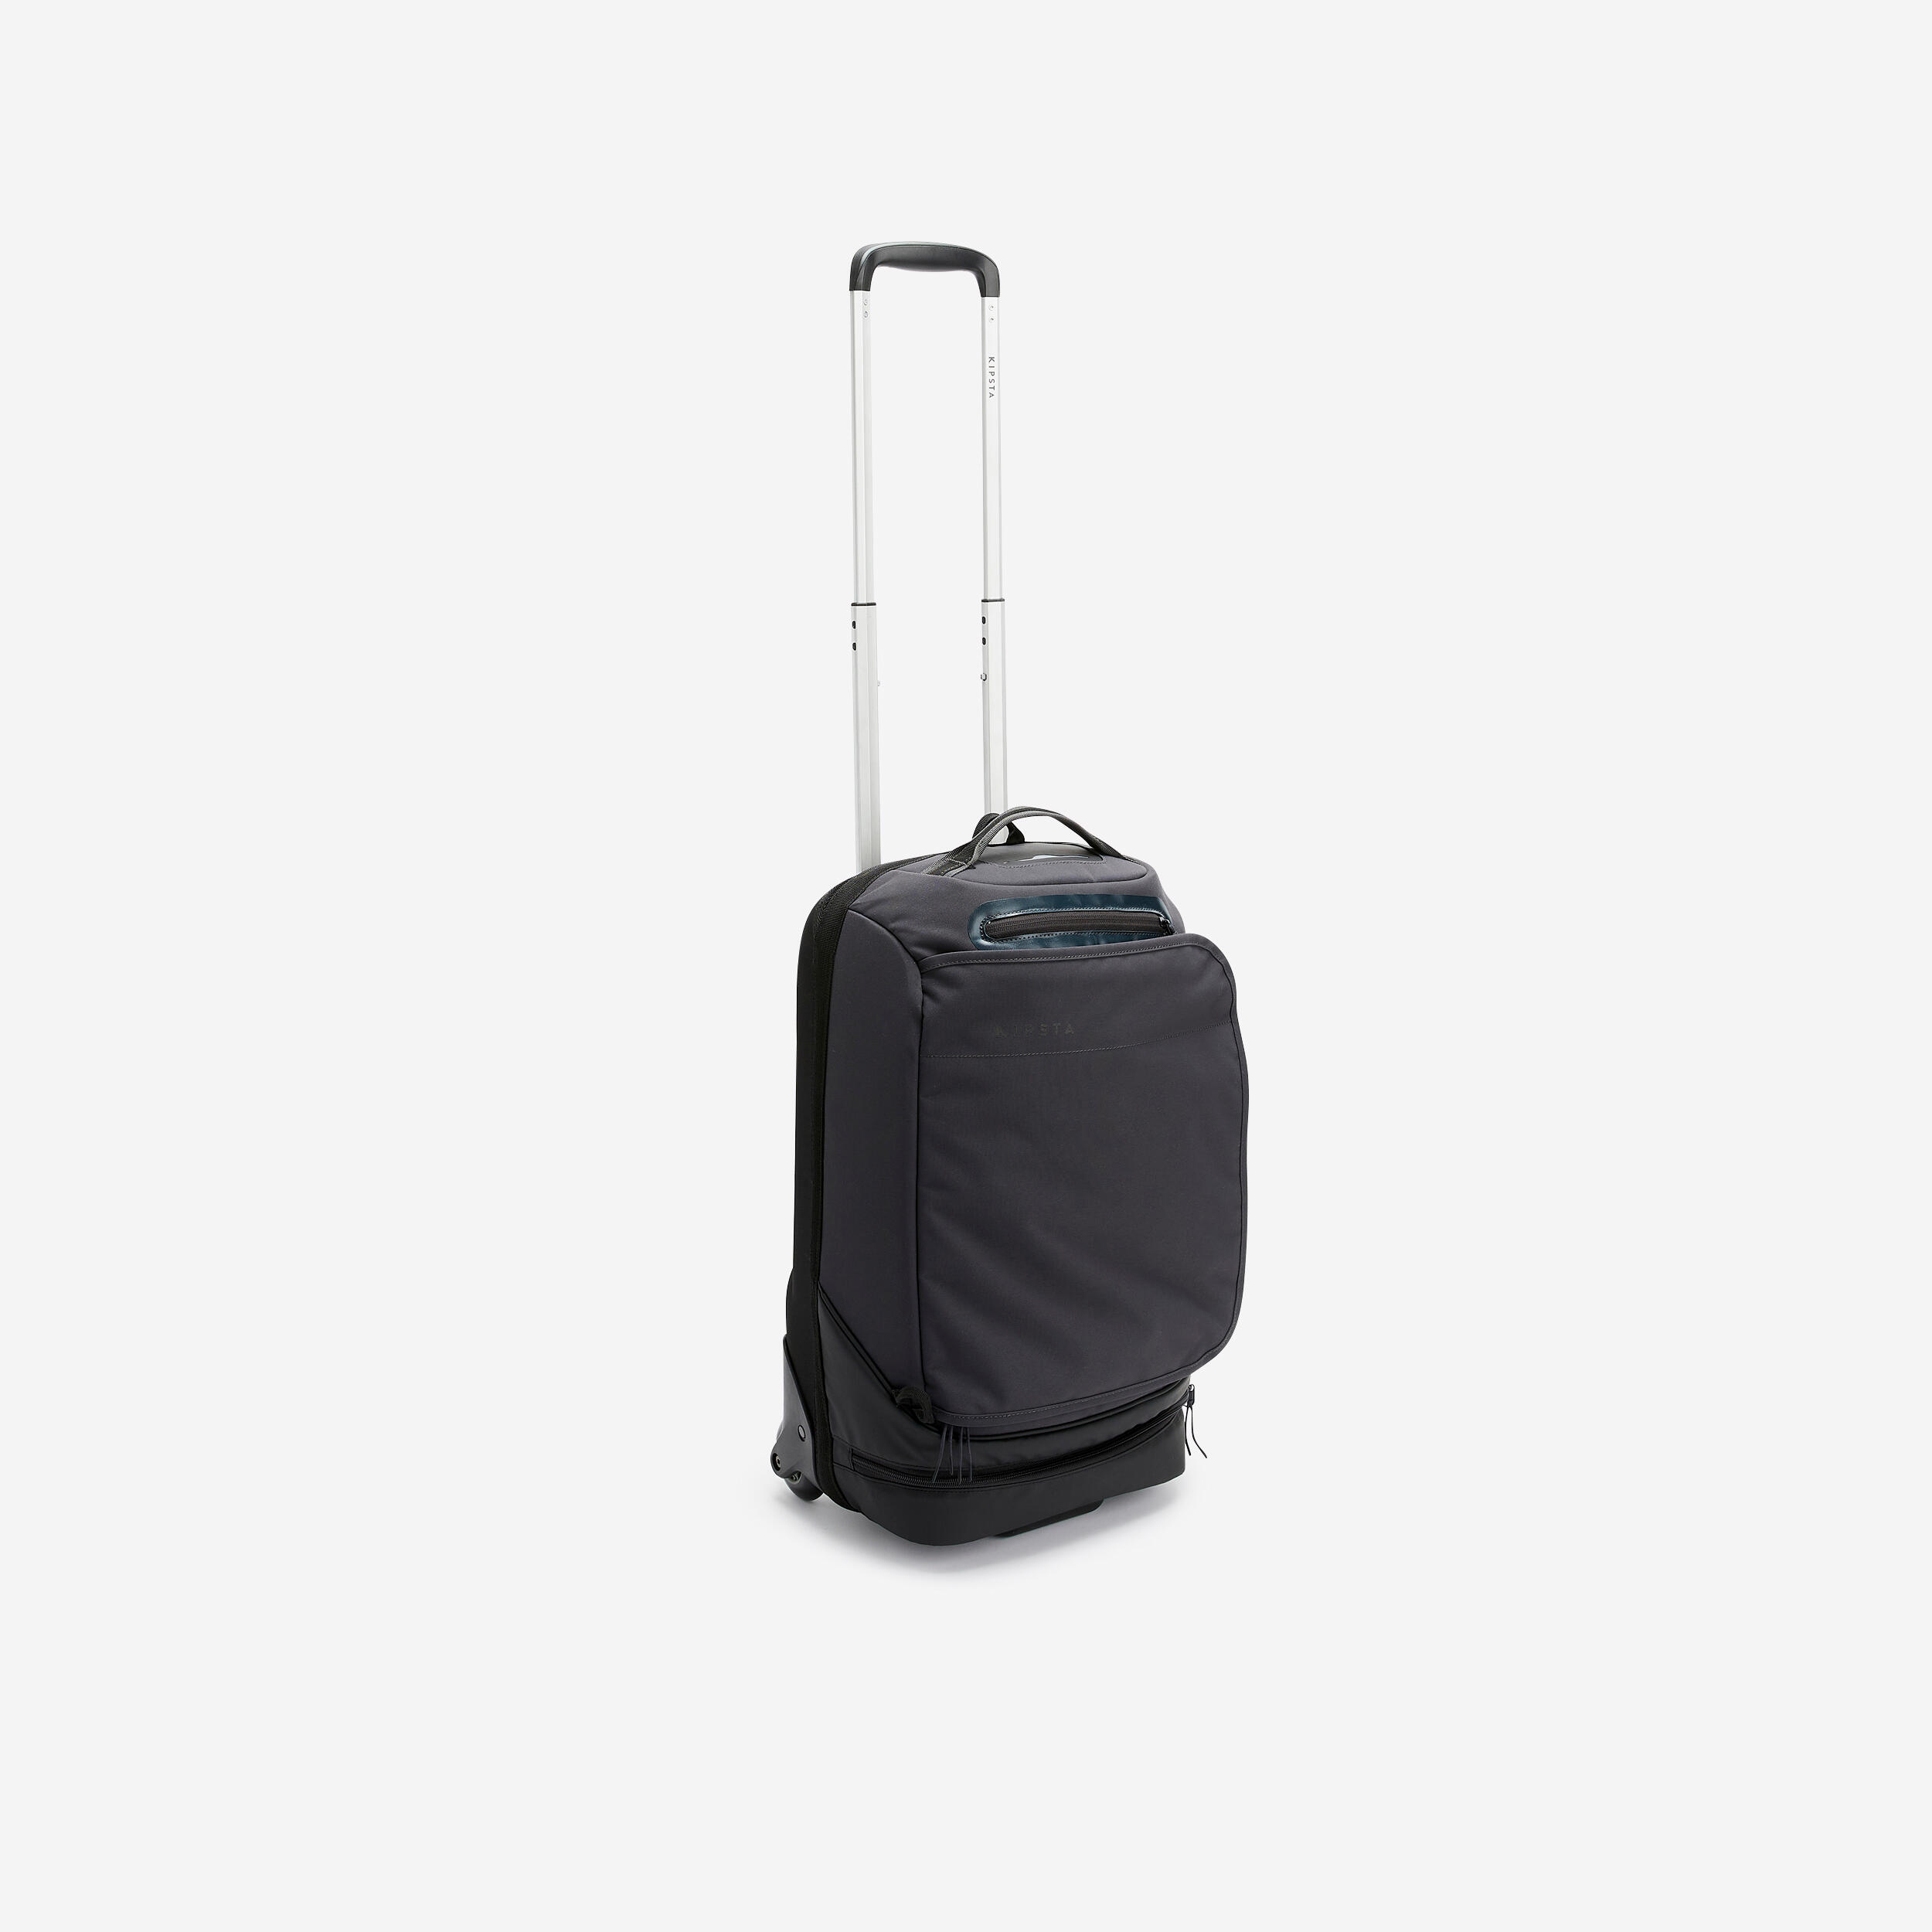 Plastic Trolley Bag 4 Wheels For Luggage Load Capacity  100 kg